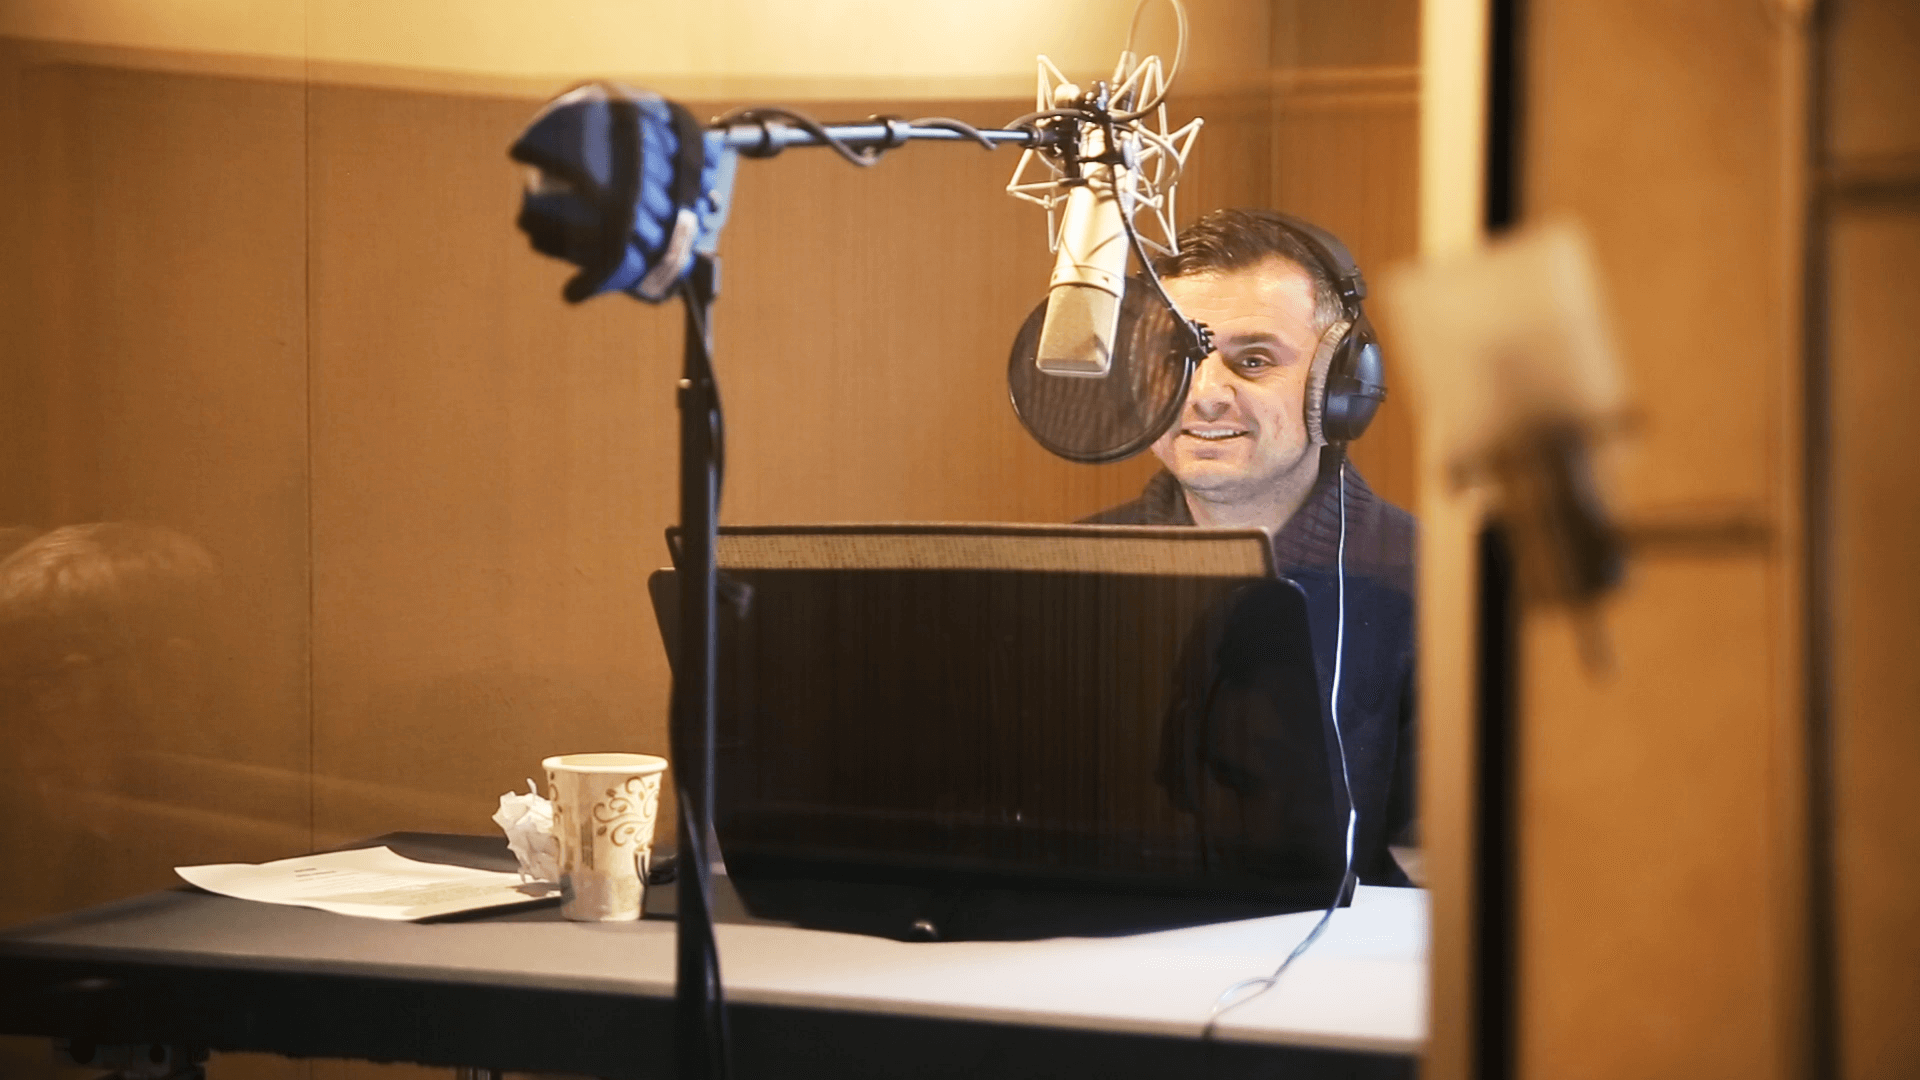 DailyVee 007: Going Off-Script On My Audiobook